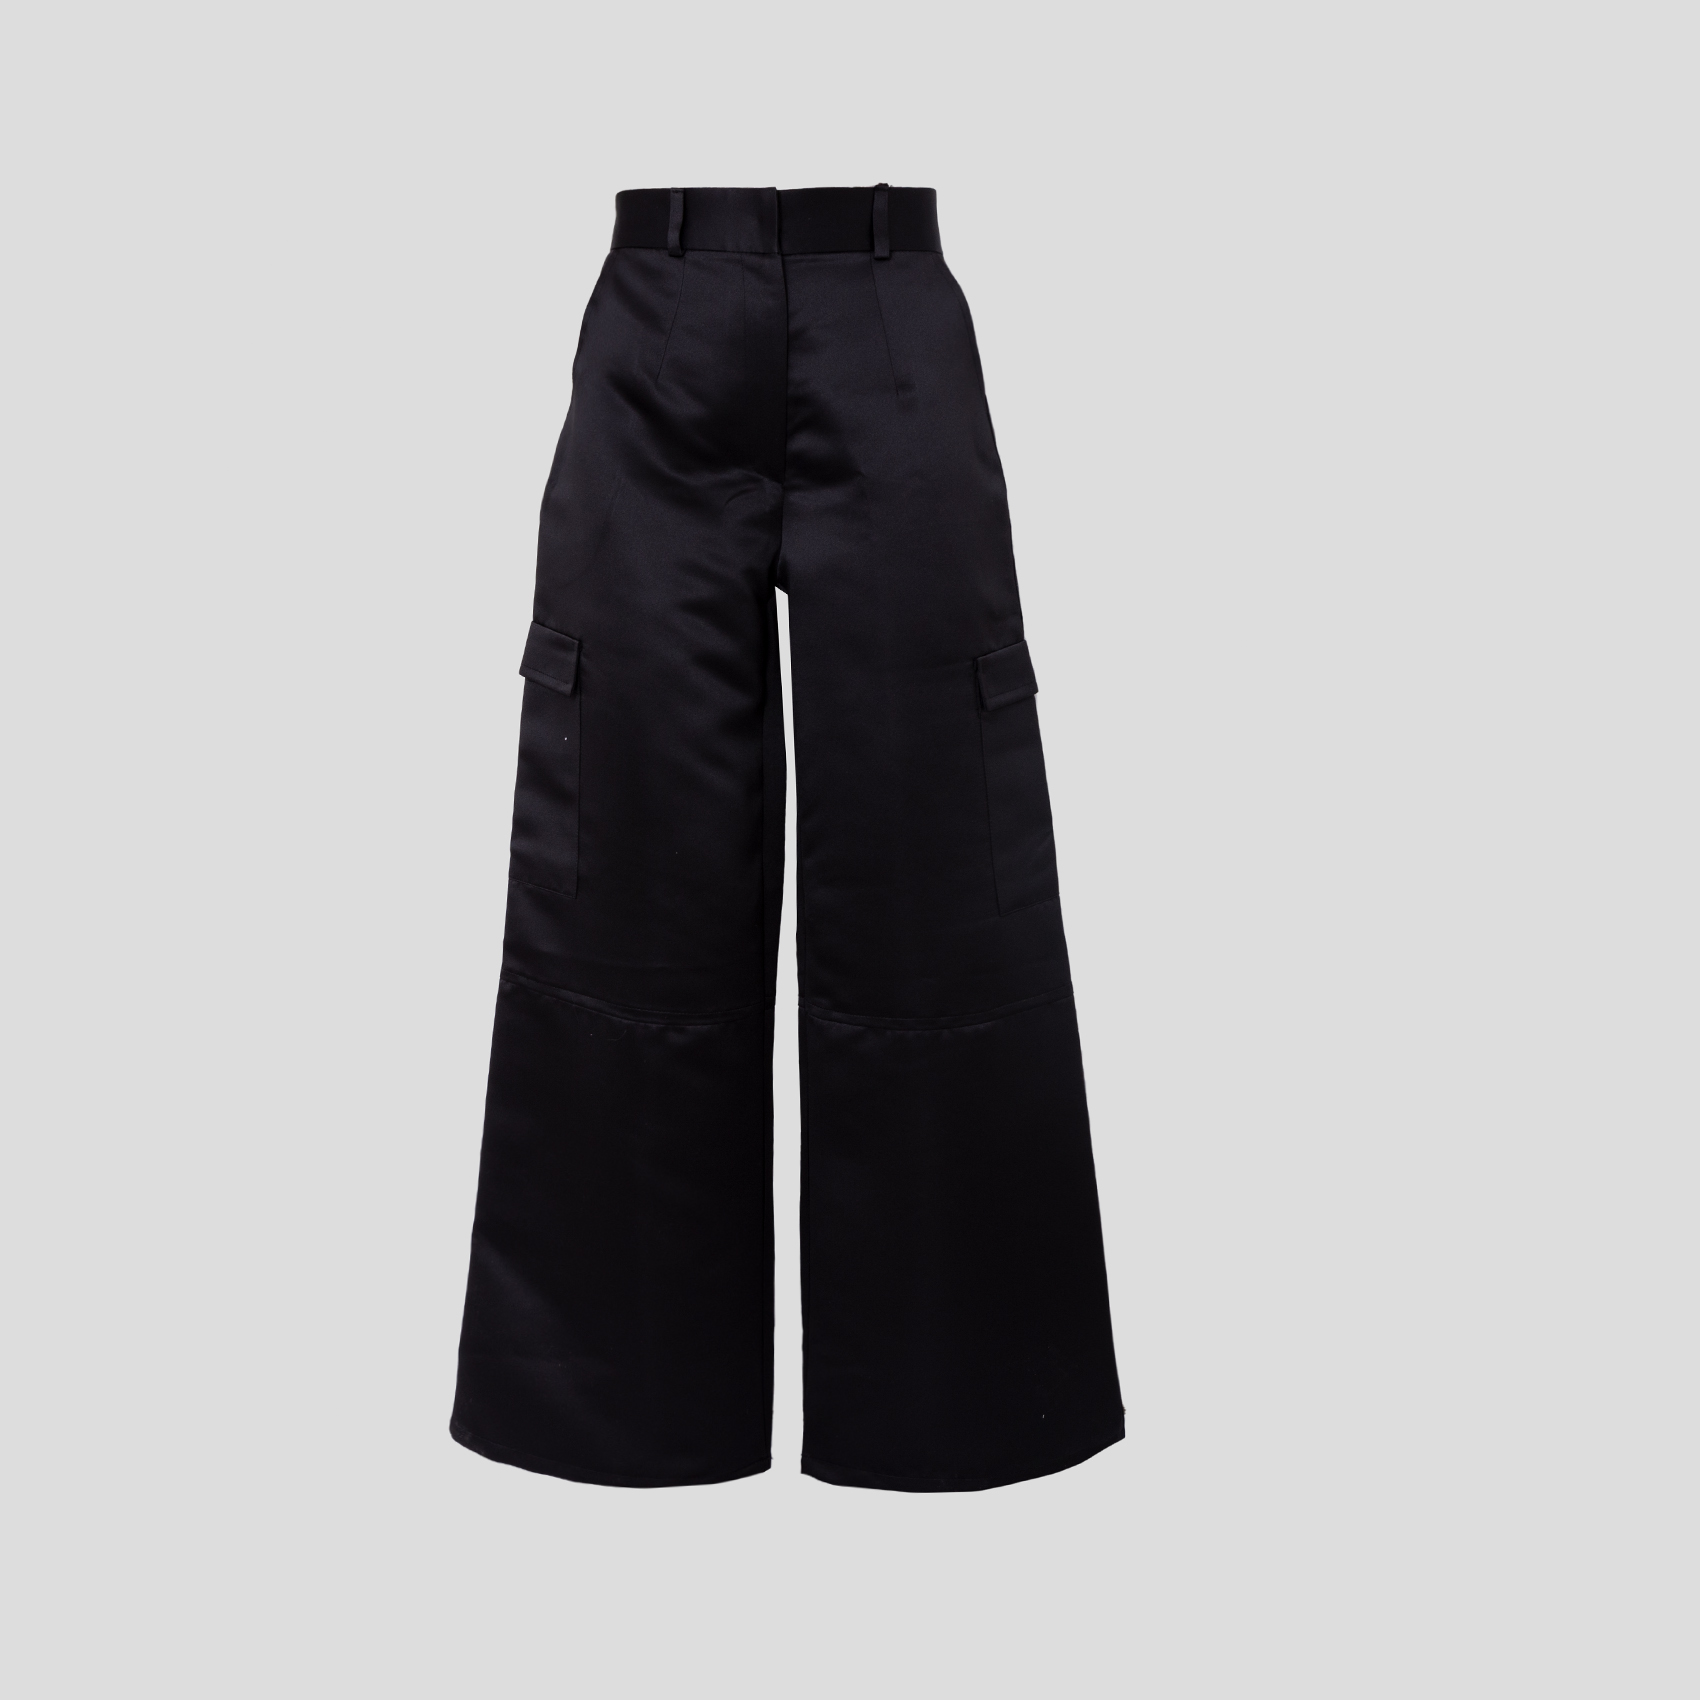 Asoran Women's Black Dress Pants High Waist Ponte Knit Tuxedo Pants Stretch  Straight Slacks with Leather Stripe : : Clothing, Shoes 